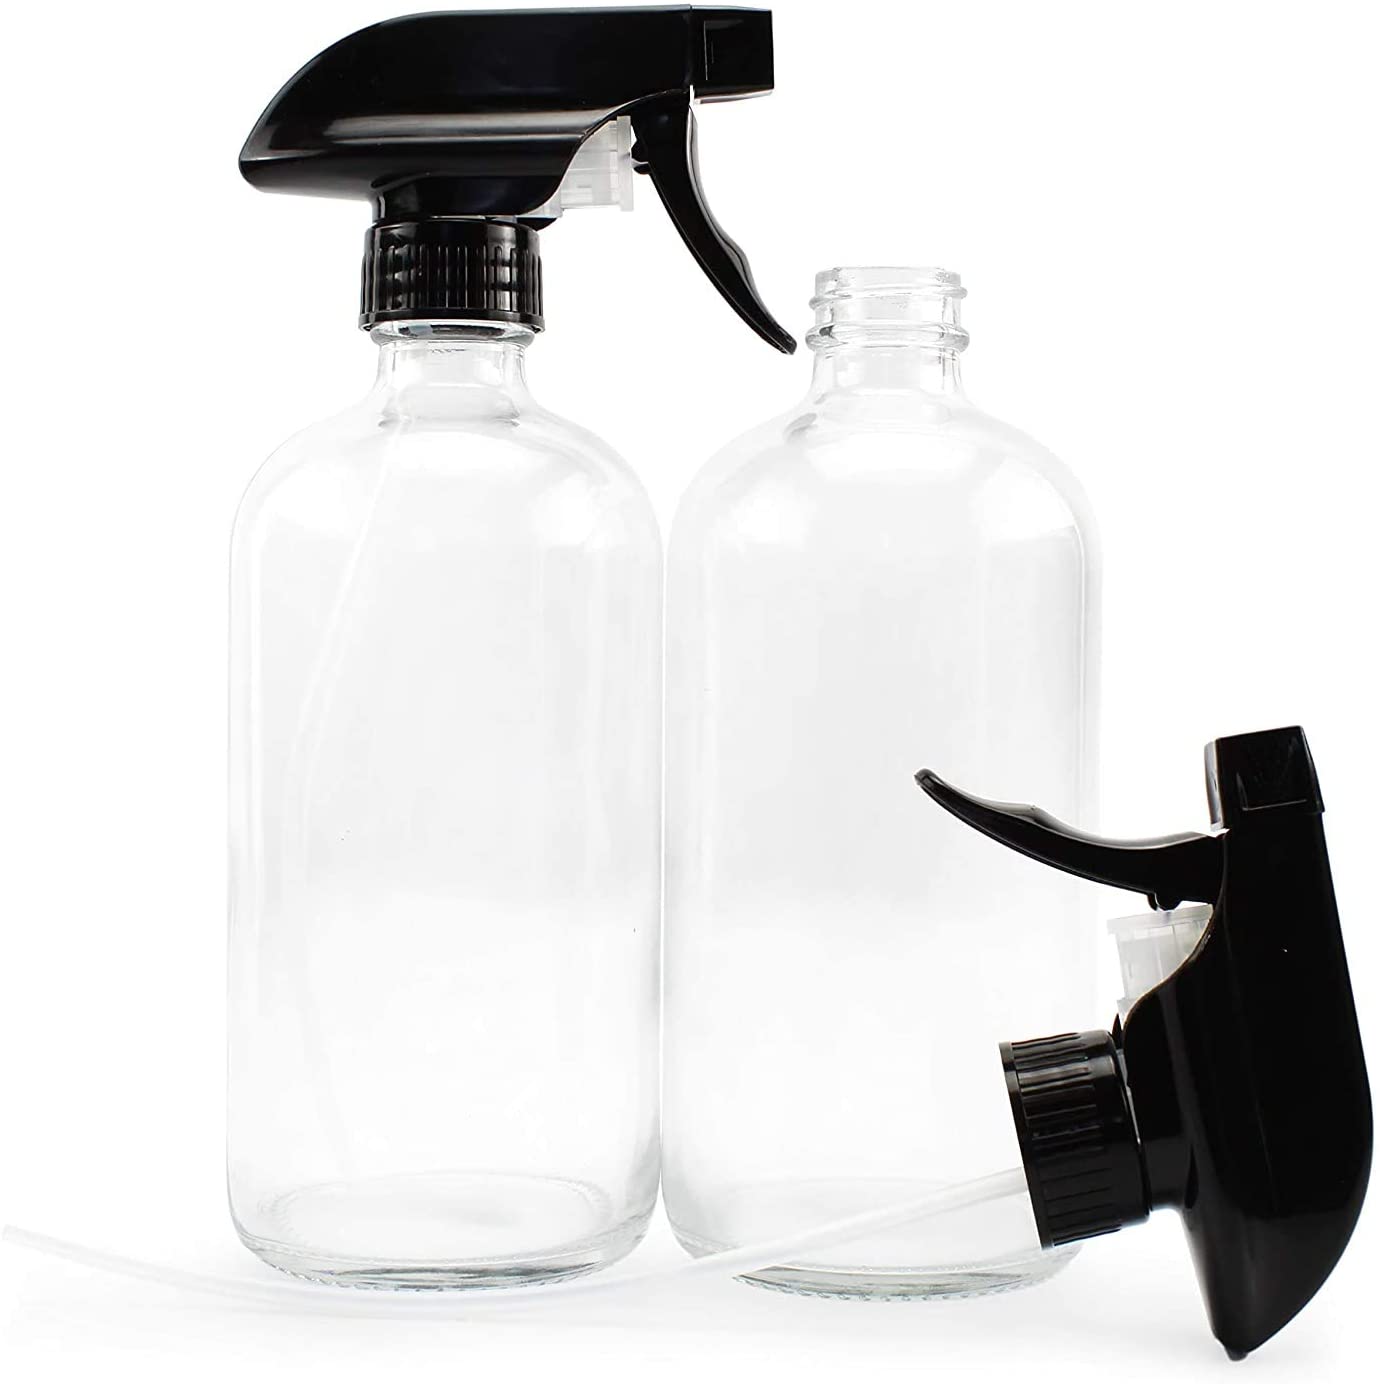 16oz Clear Glass Spray Bottles (24-Pack)